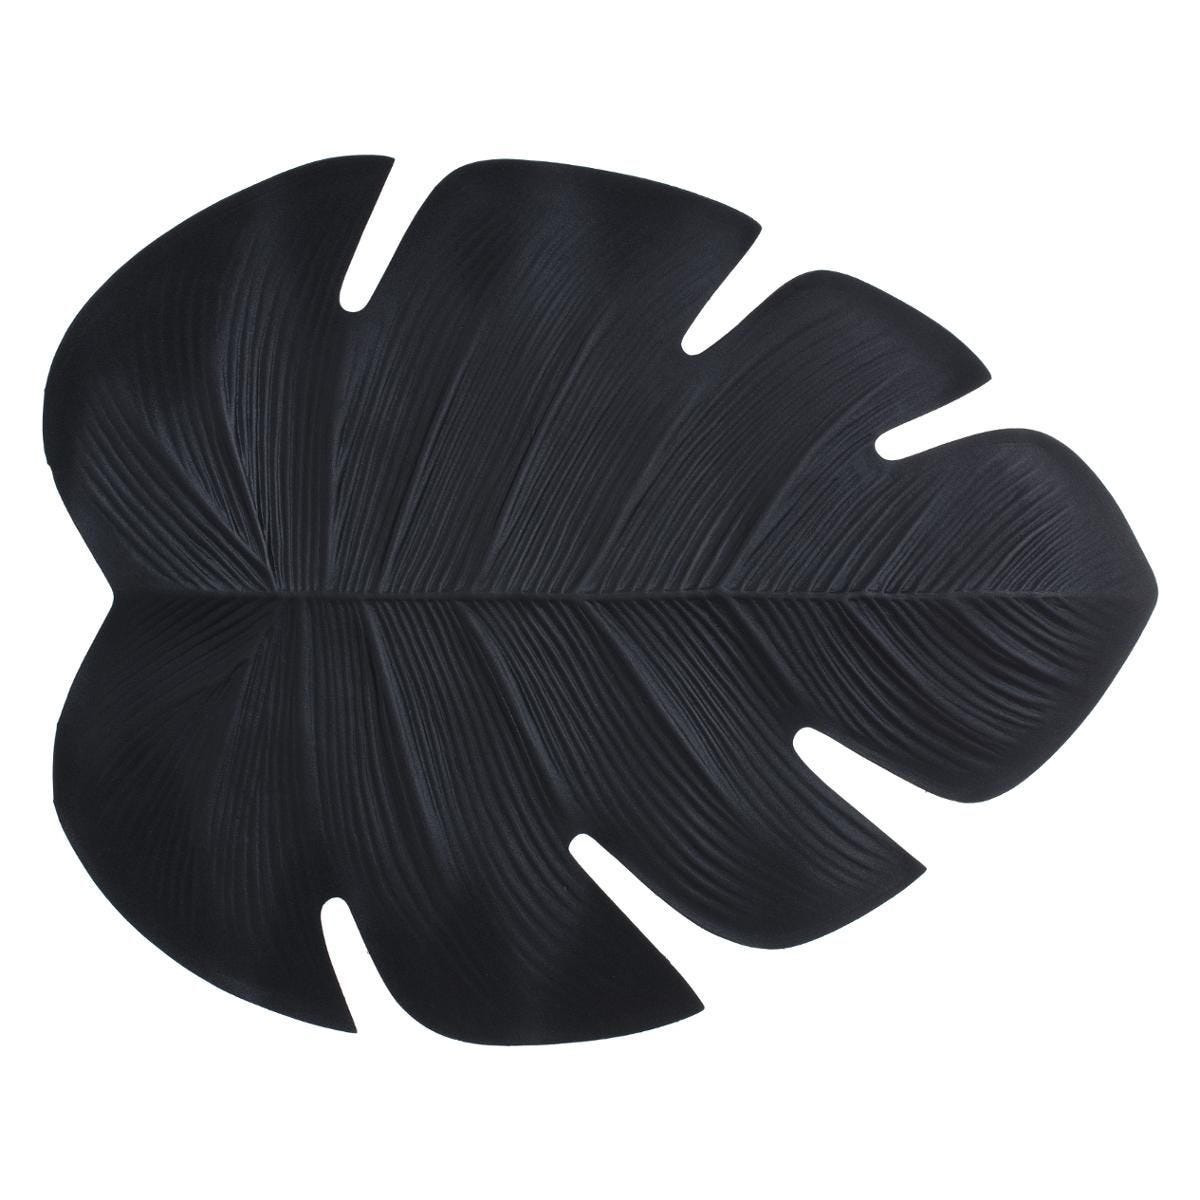 Placemat blad zwart vinyl 47 x 38 cm